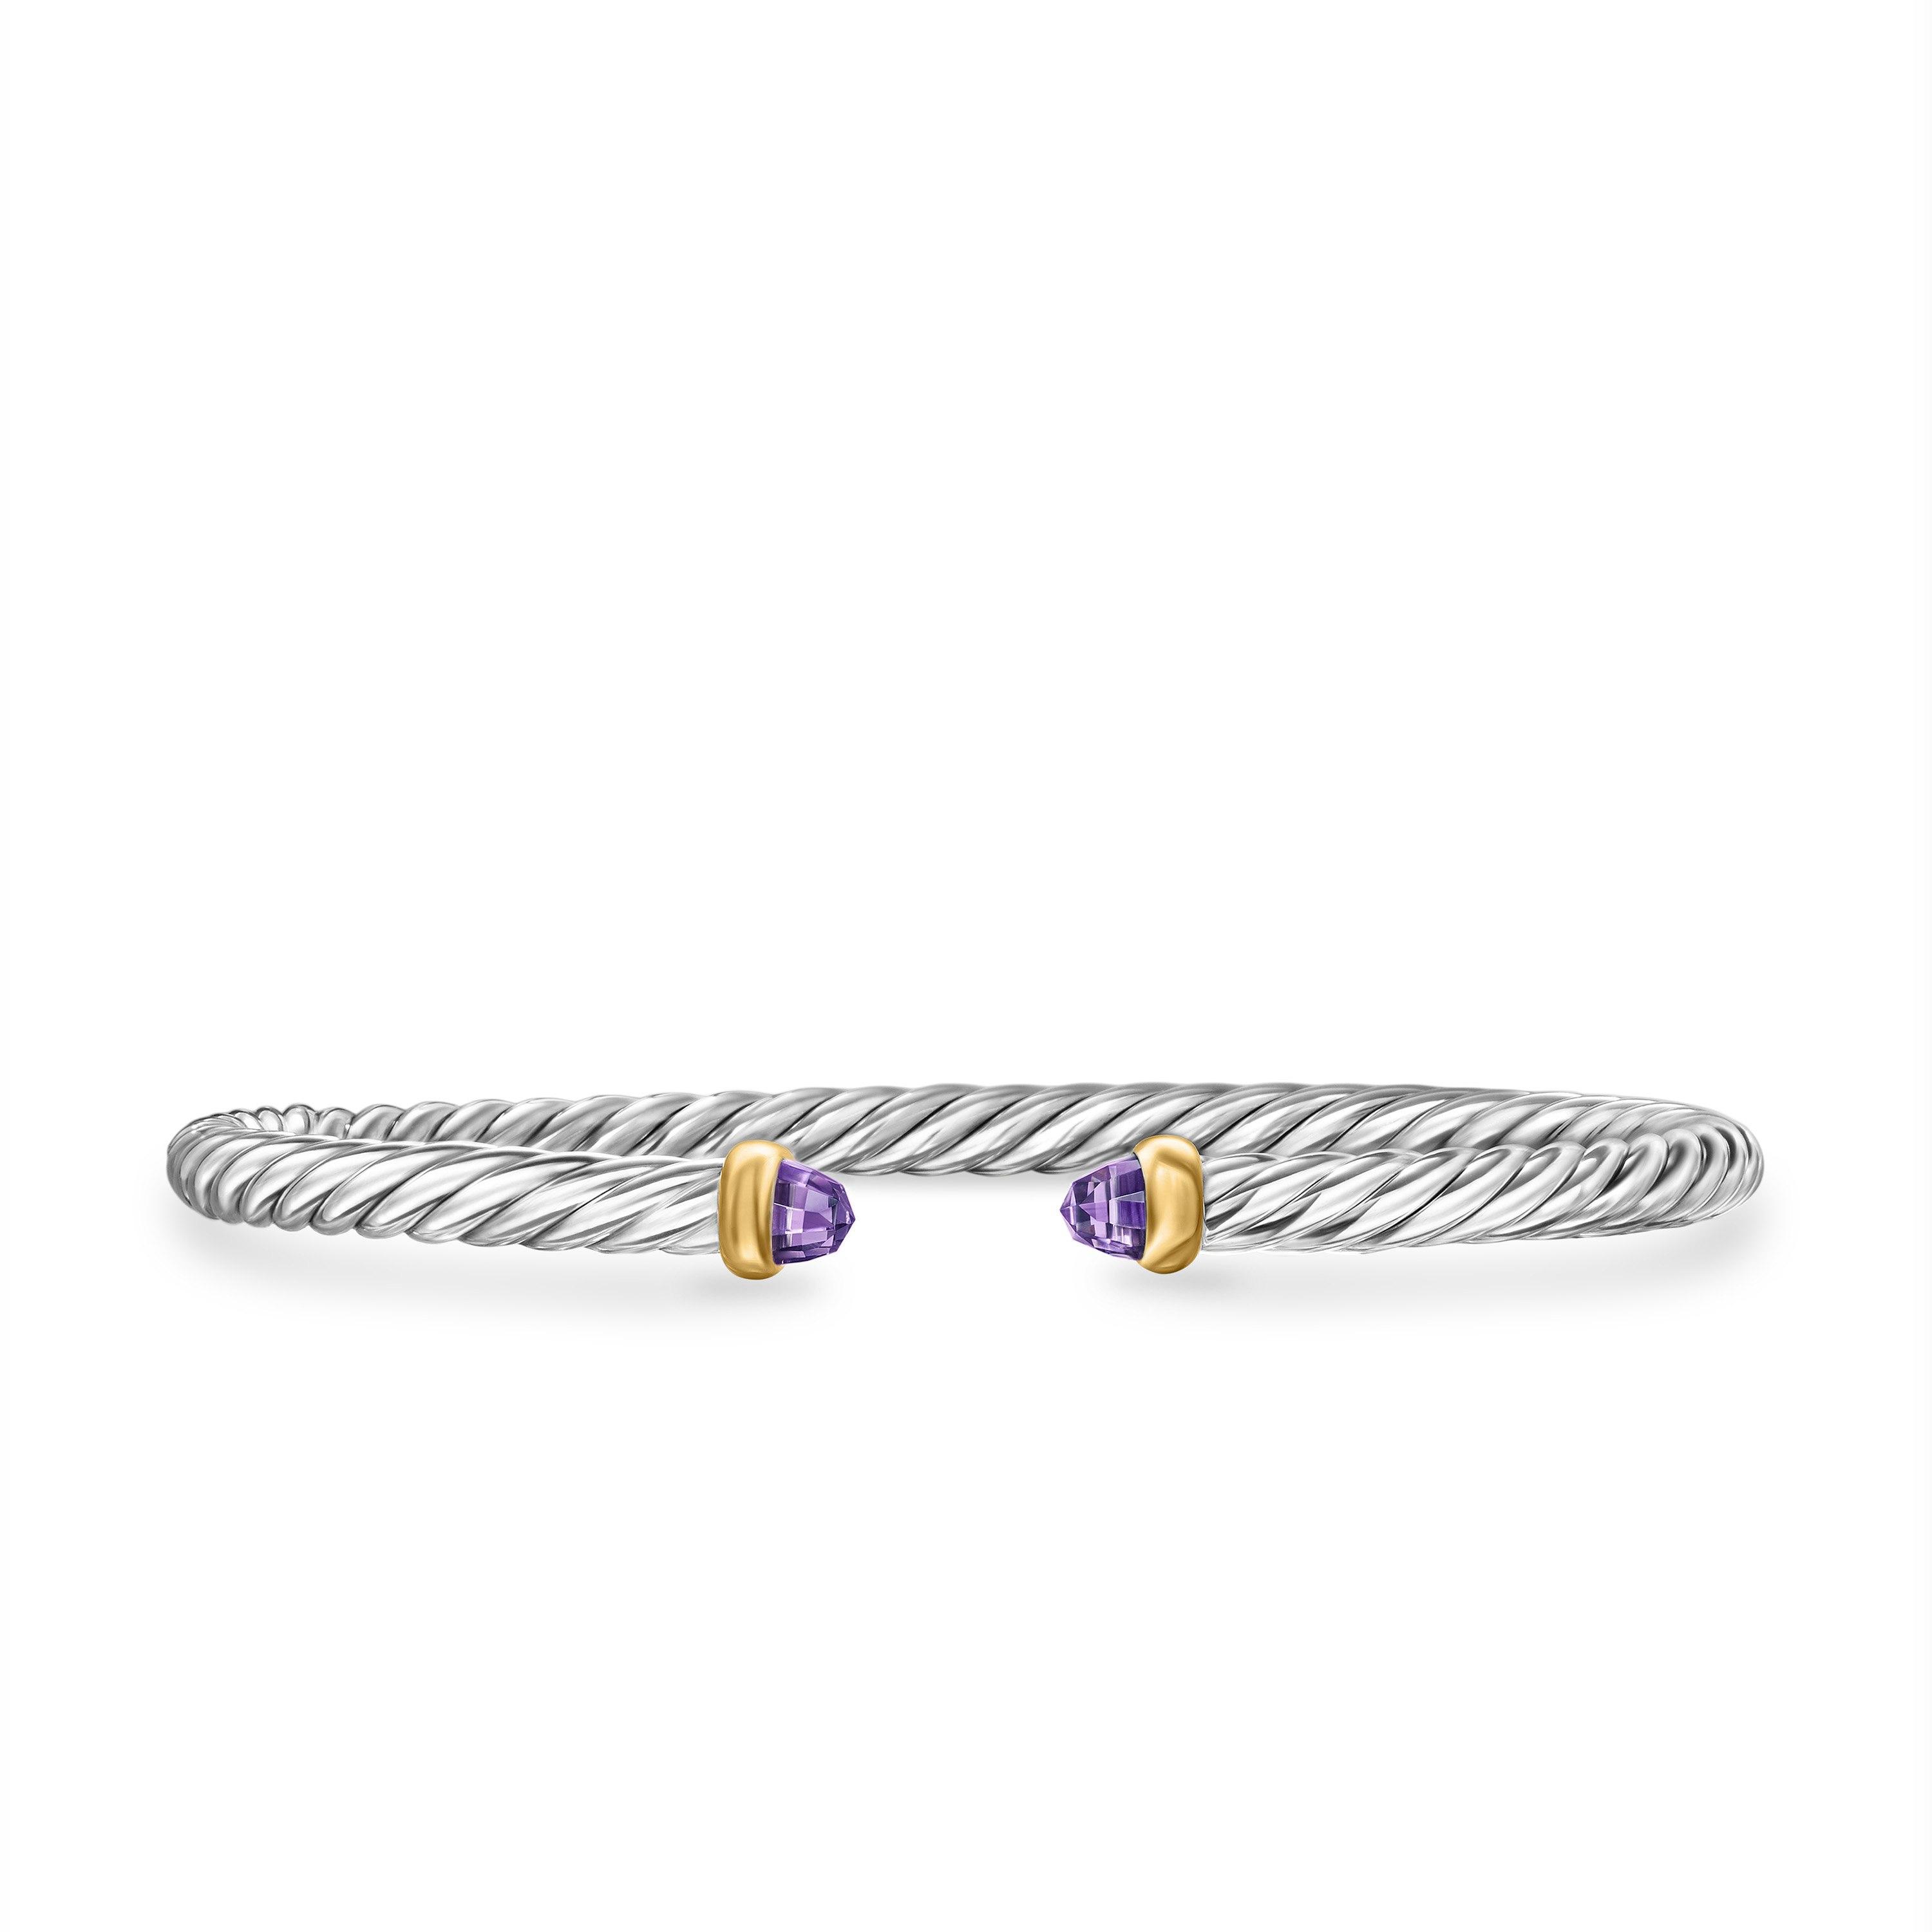 David Yurman Cable Flex Sterling Silver Bracelet with Amethyst, Size Large